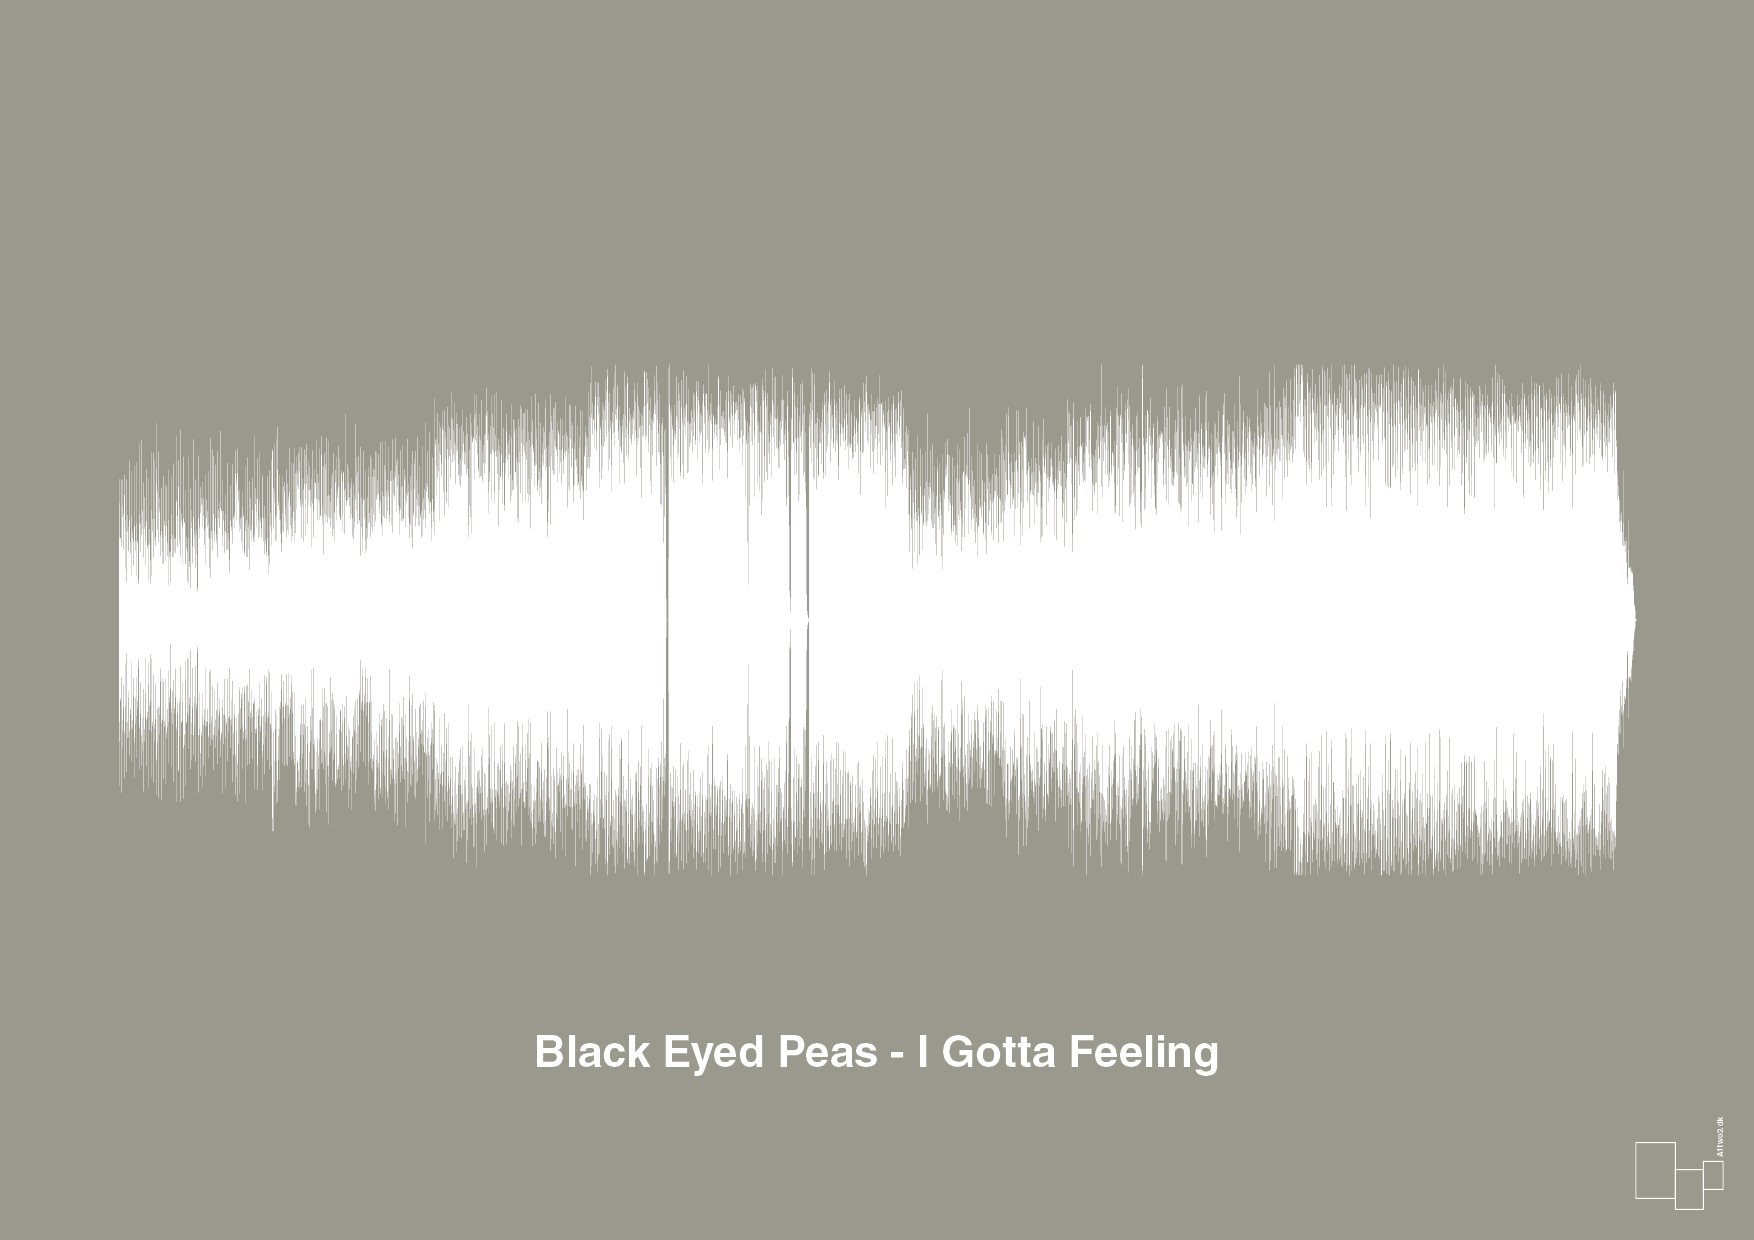 black eyed peas - i gotta feeling - Plakat med Musik i Battleship Gray